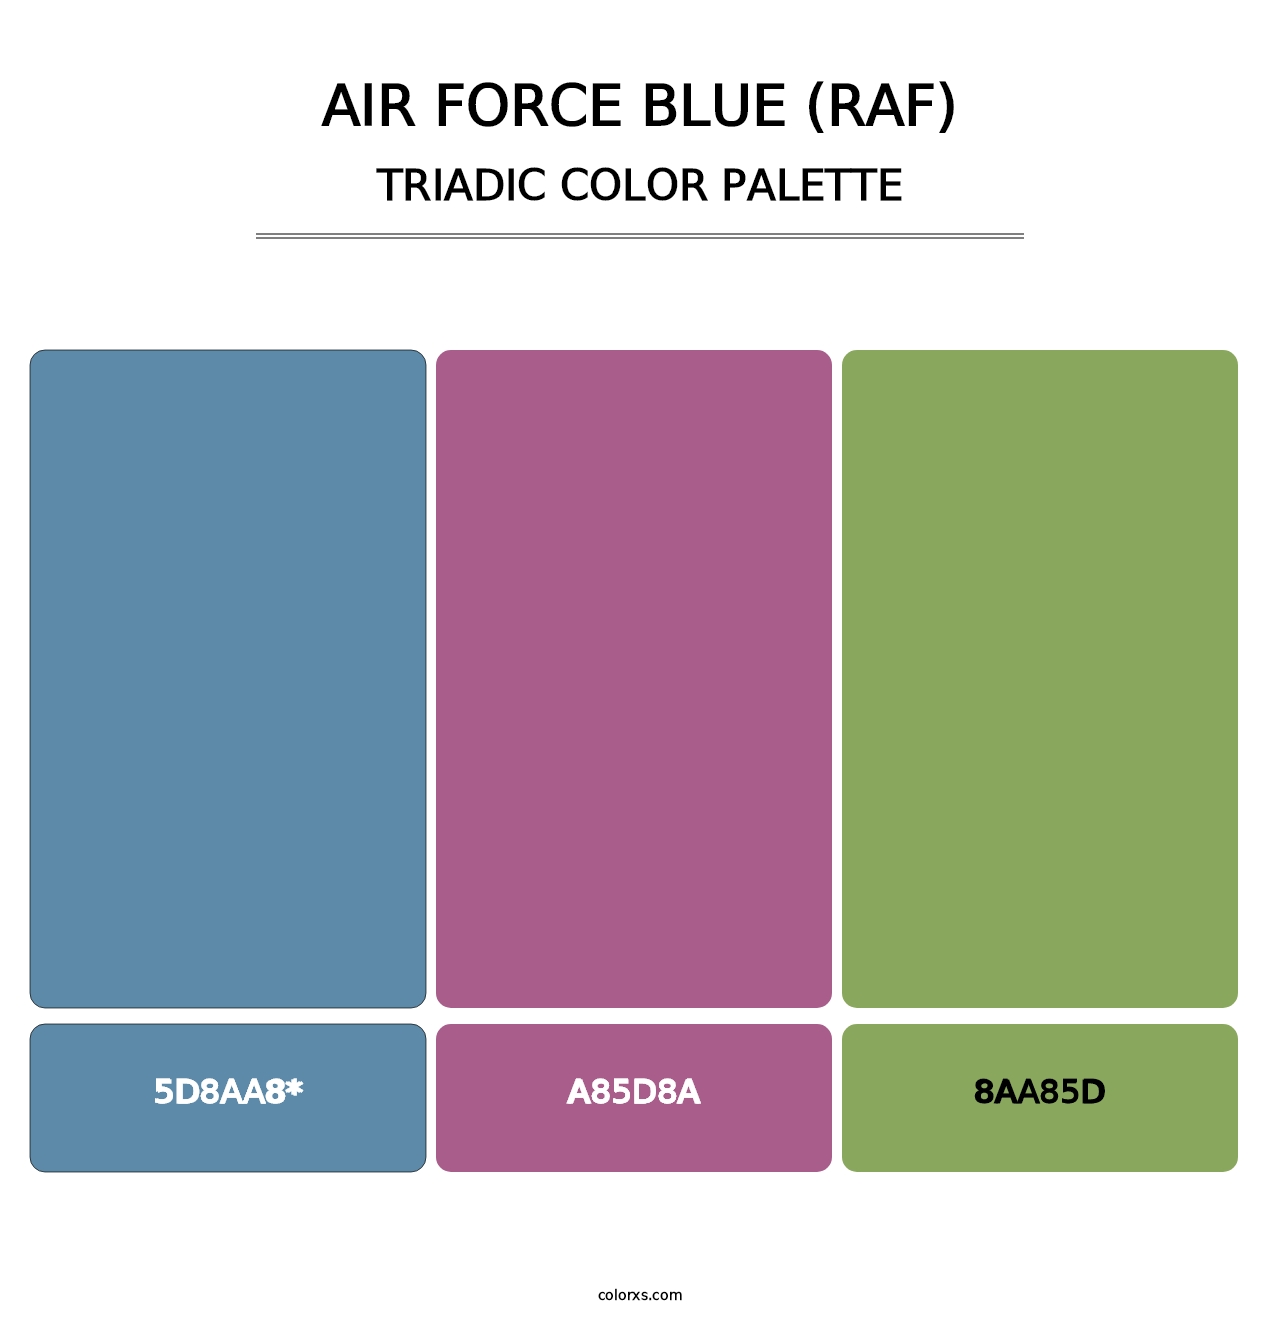 Air Force Blue (RAF) - Triadic Color Palette